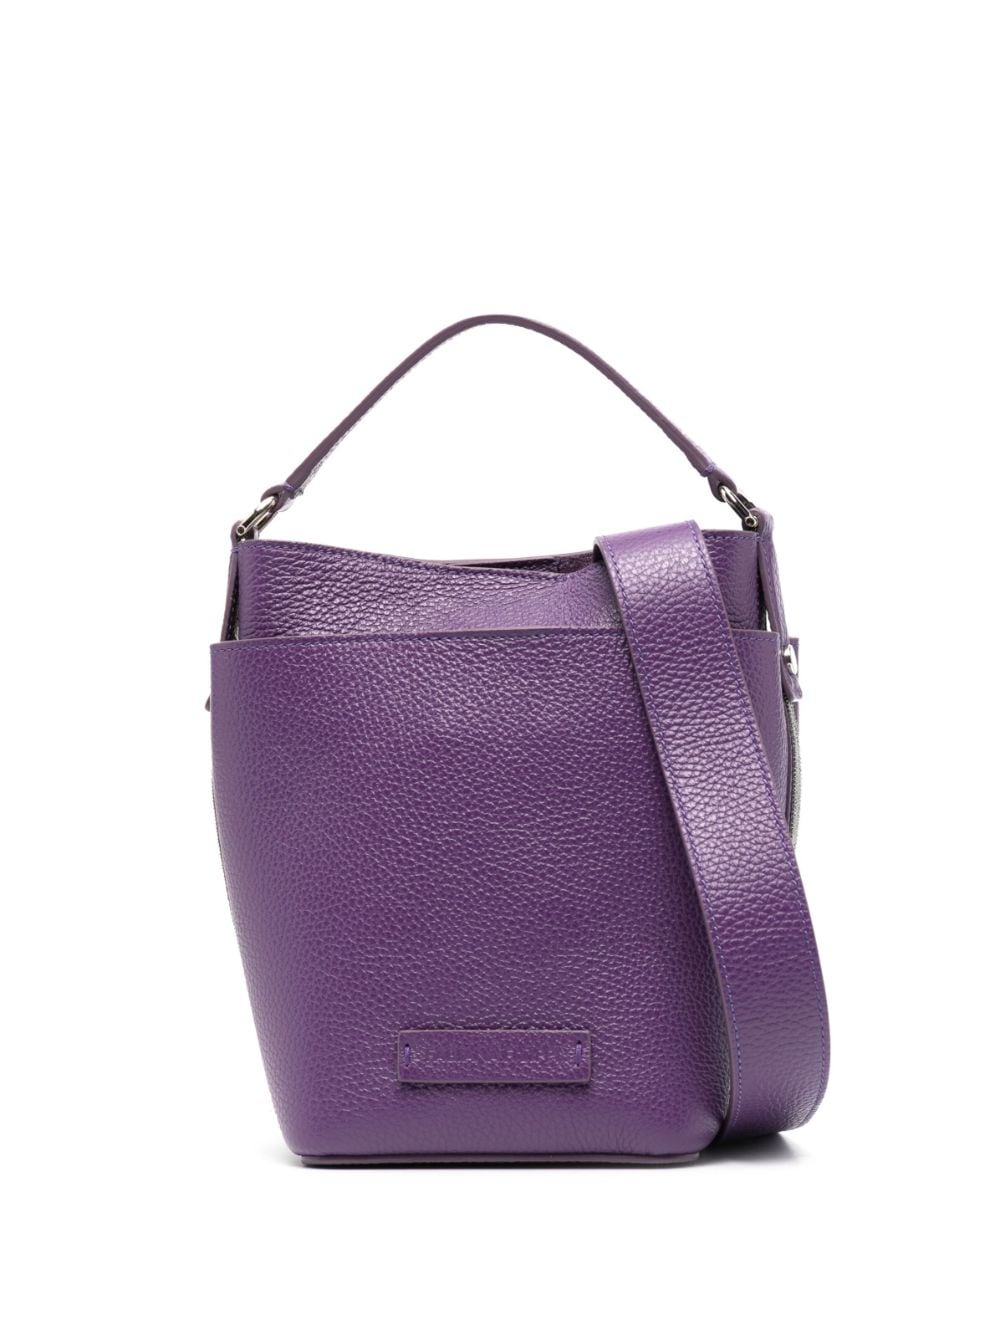 Fabiana Filippi pebbled leather tote bag - Purple von Fabiana Filippi